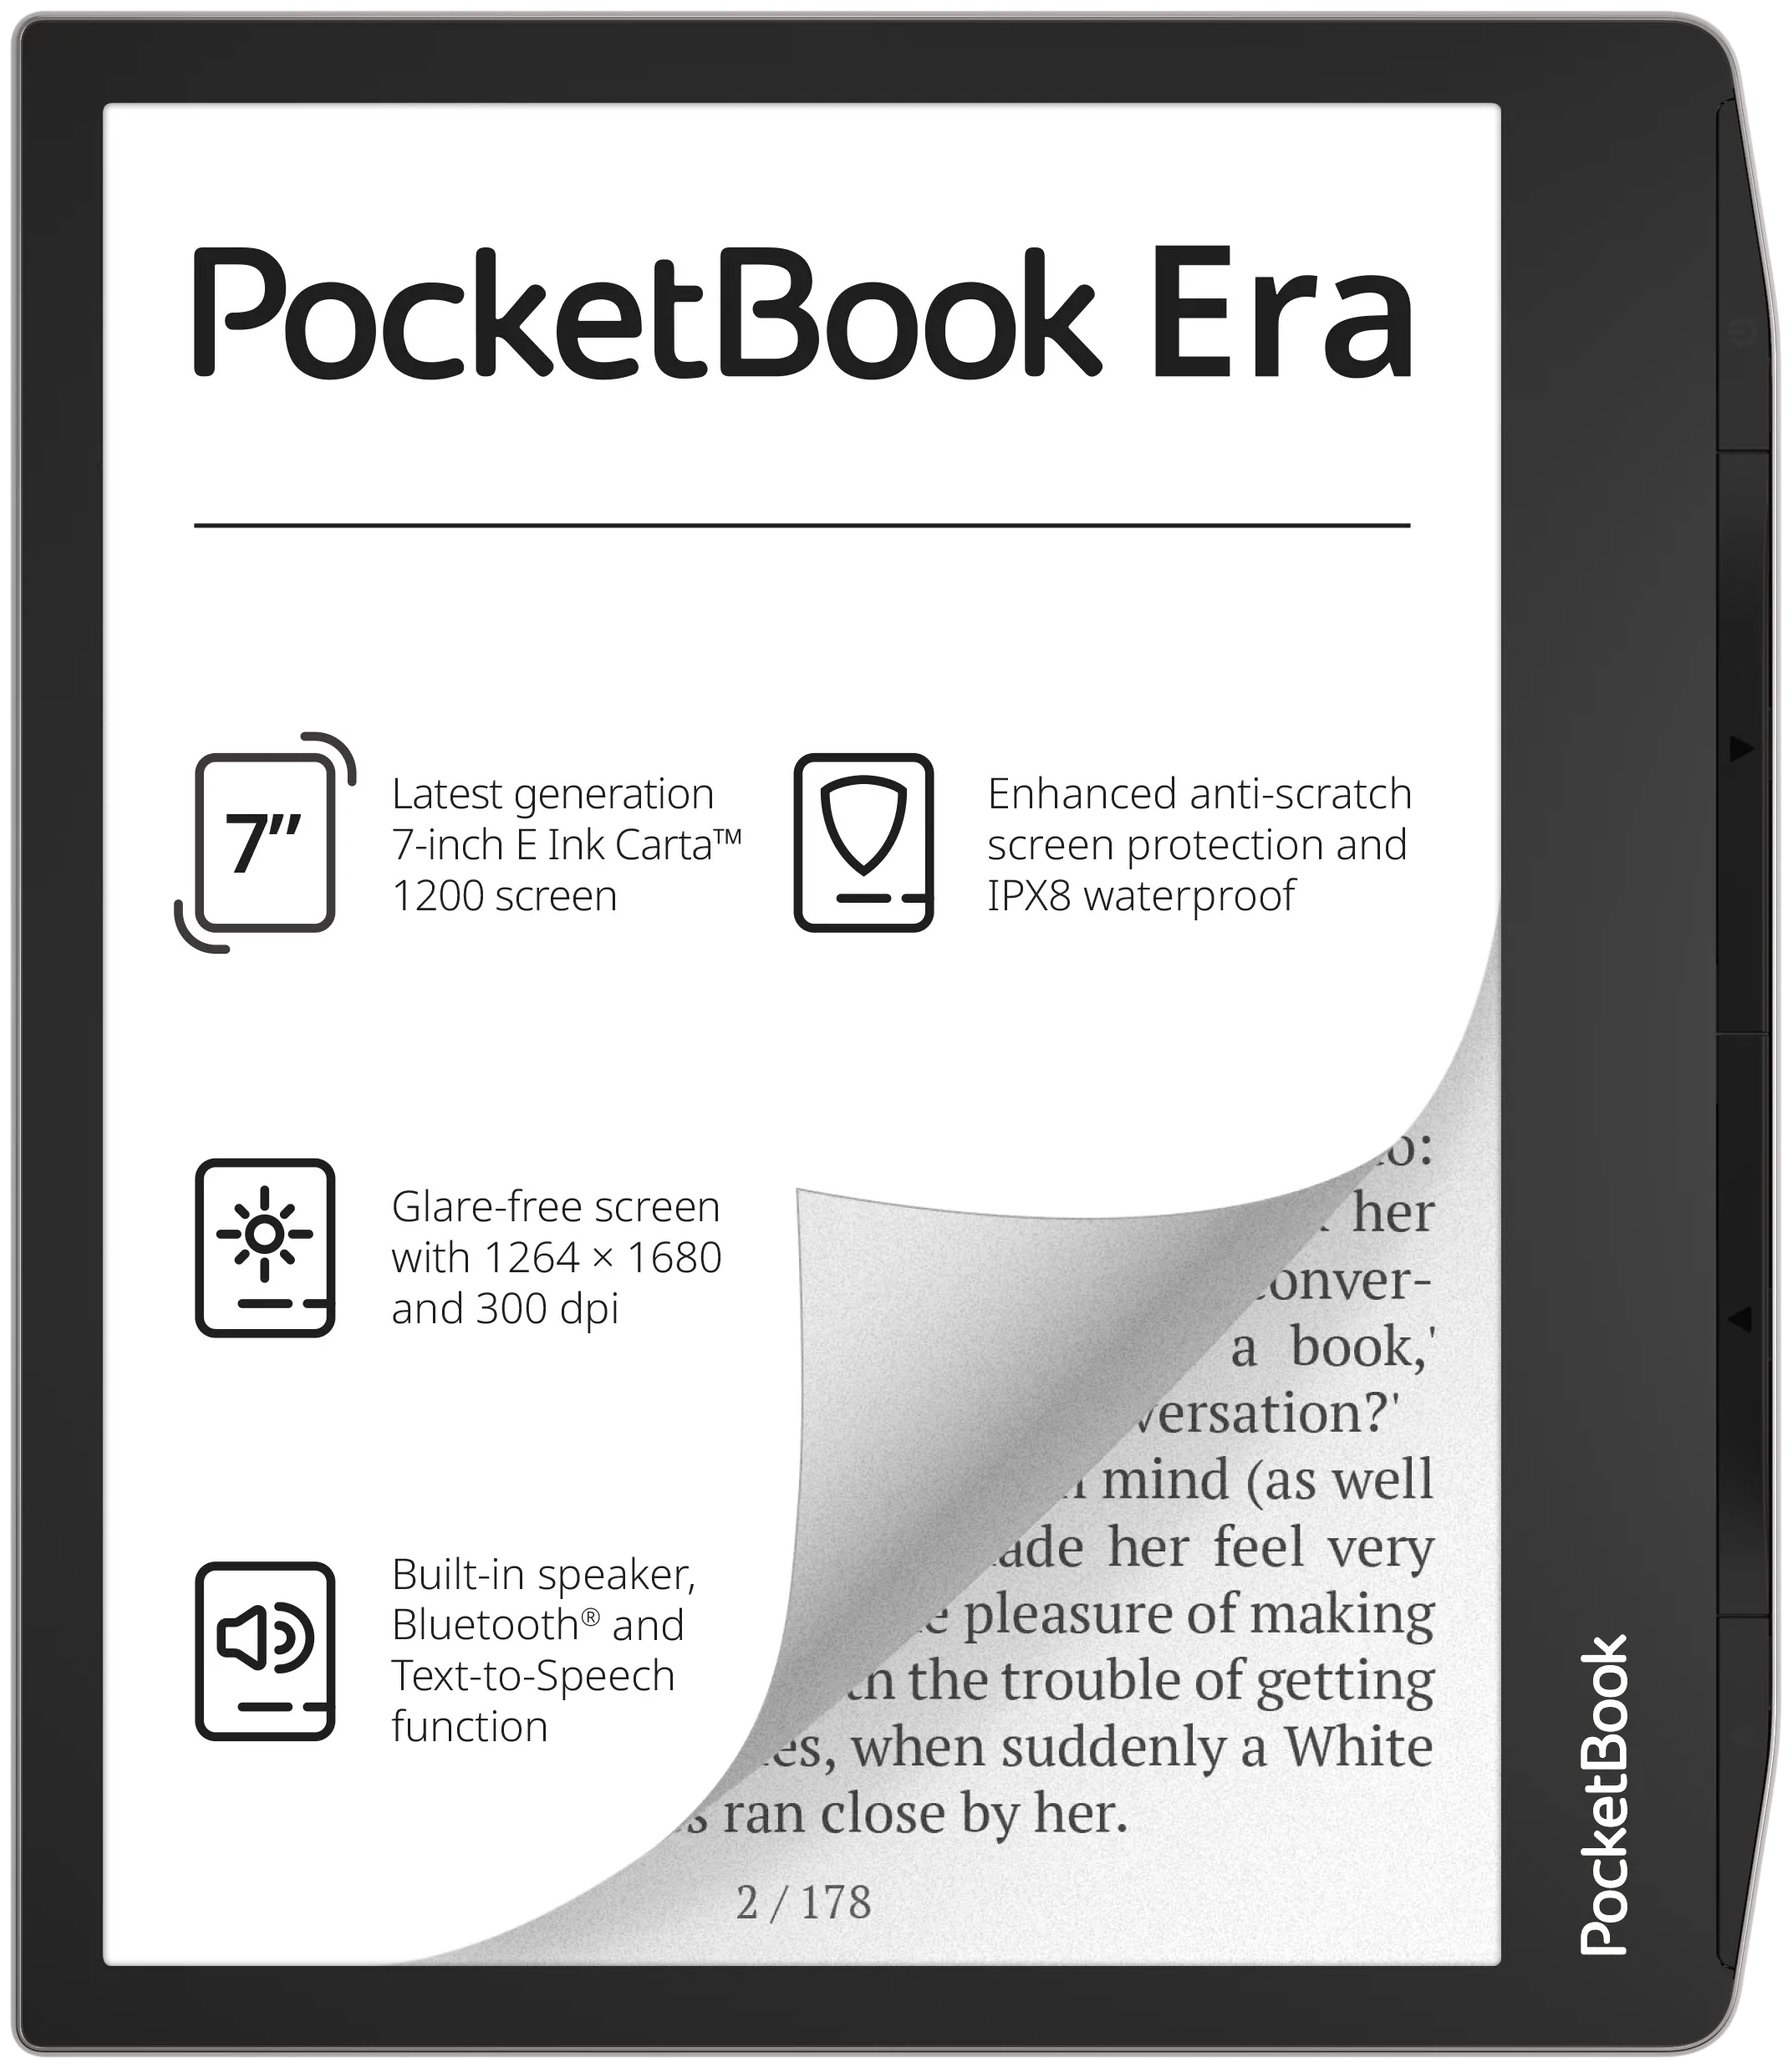 7" Электронная книга PocketBook Era 1680x1264, E-Ink, 16 ГБ, комплектация: стандартная, серебристый